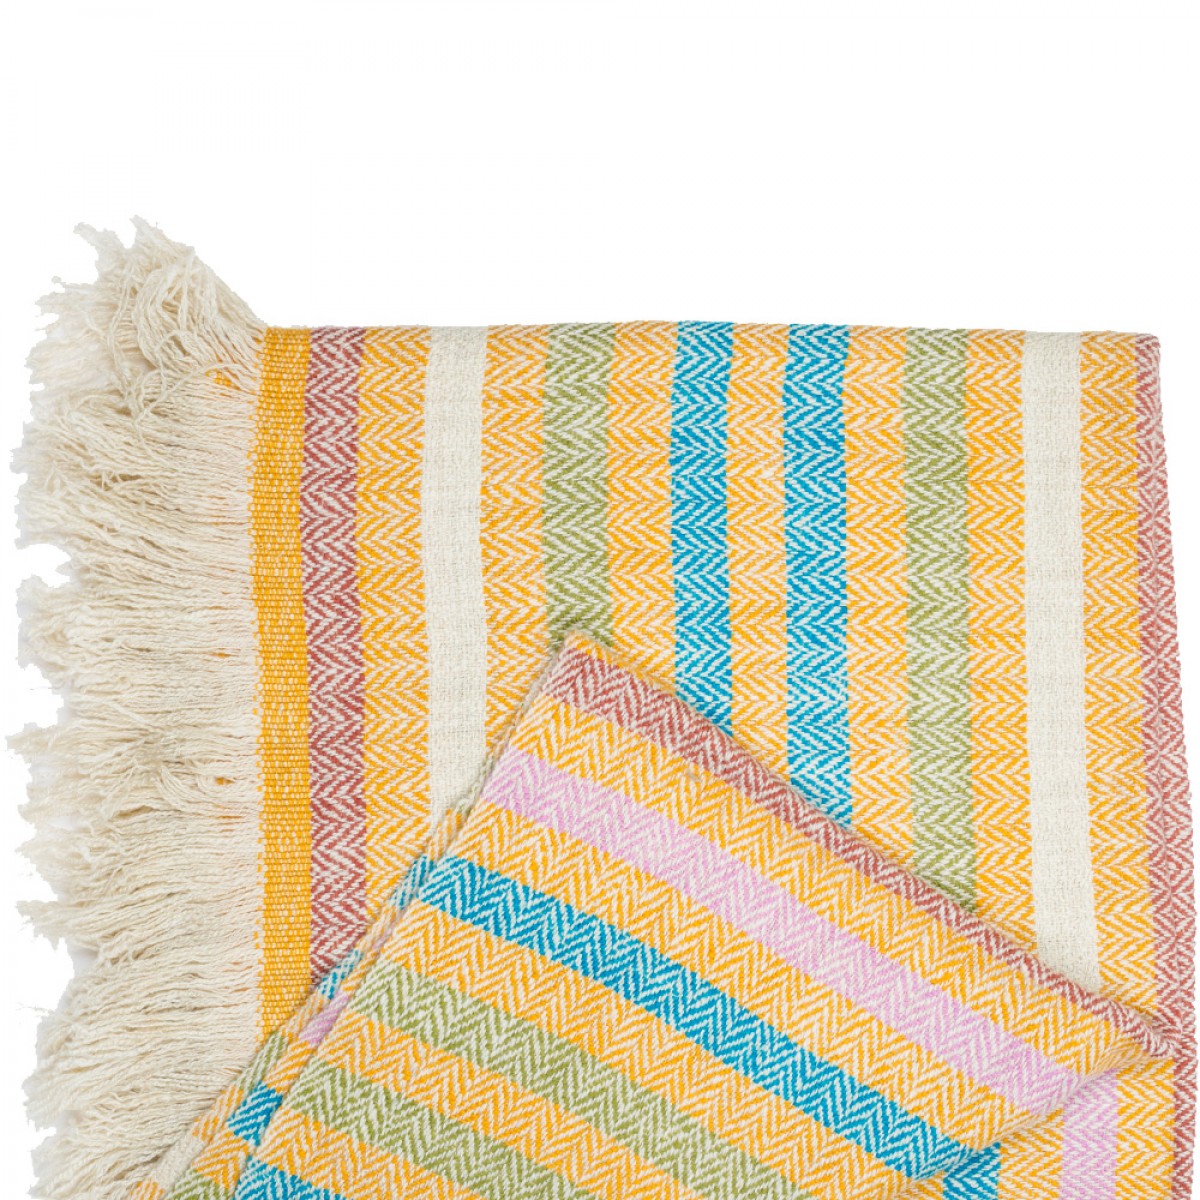 Teal & Yellow Stripes Herringbone Cashmere Blanket (Made to Order)